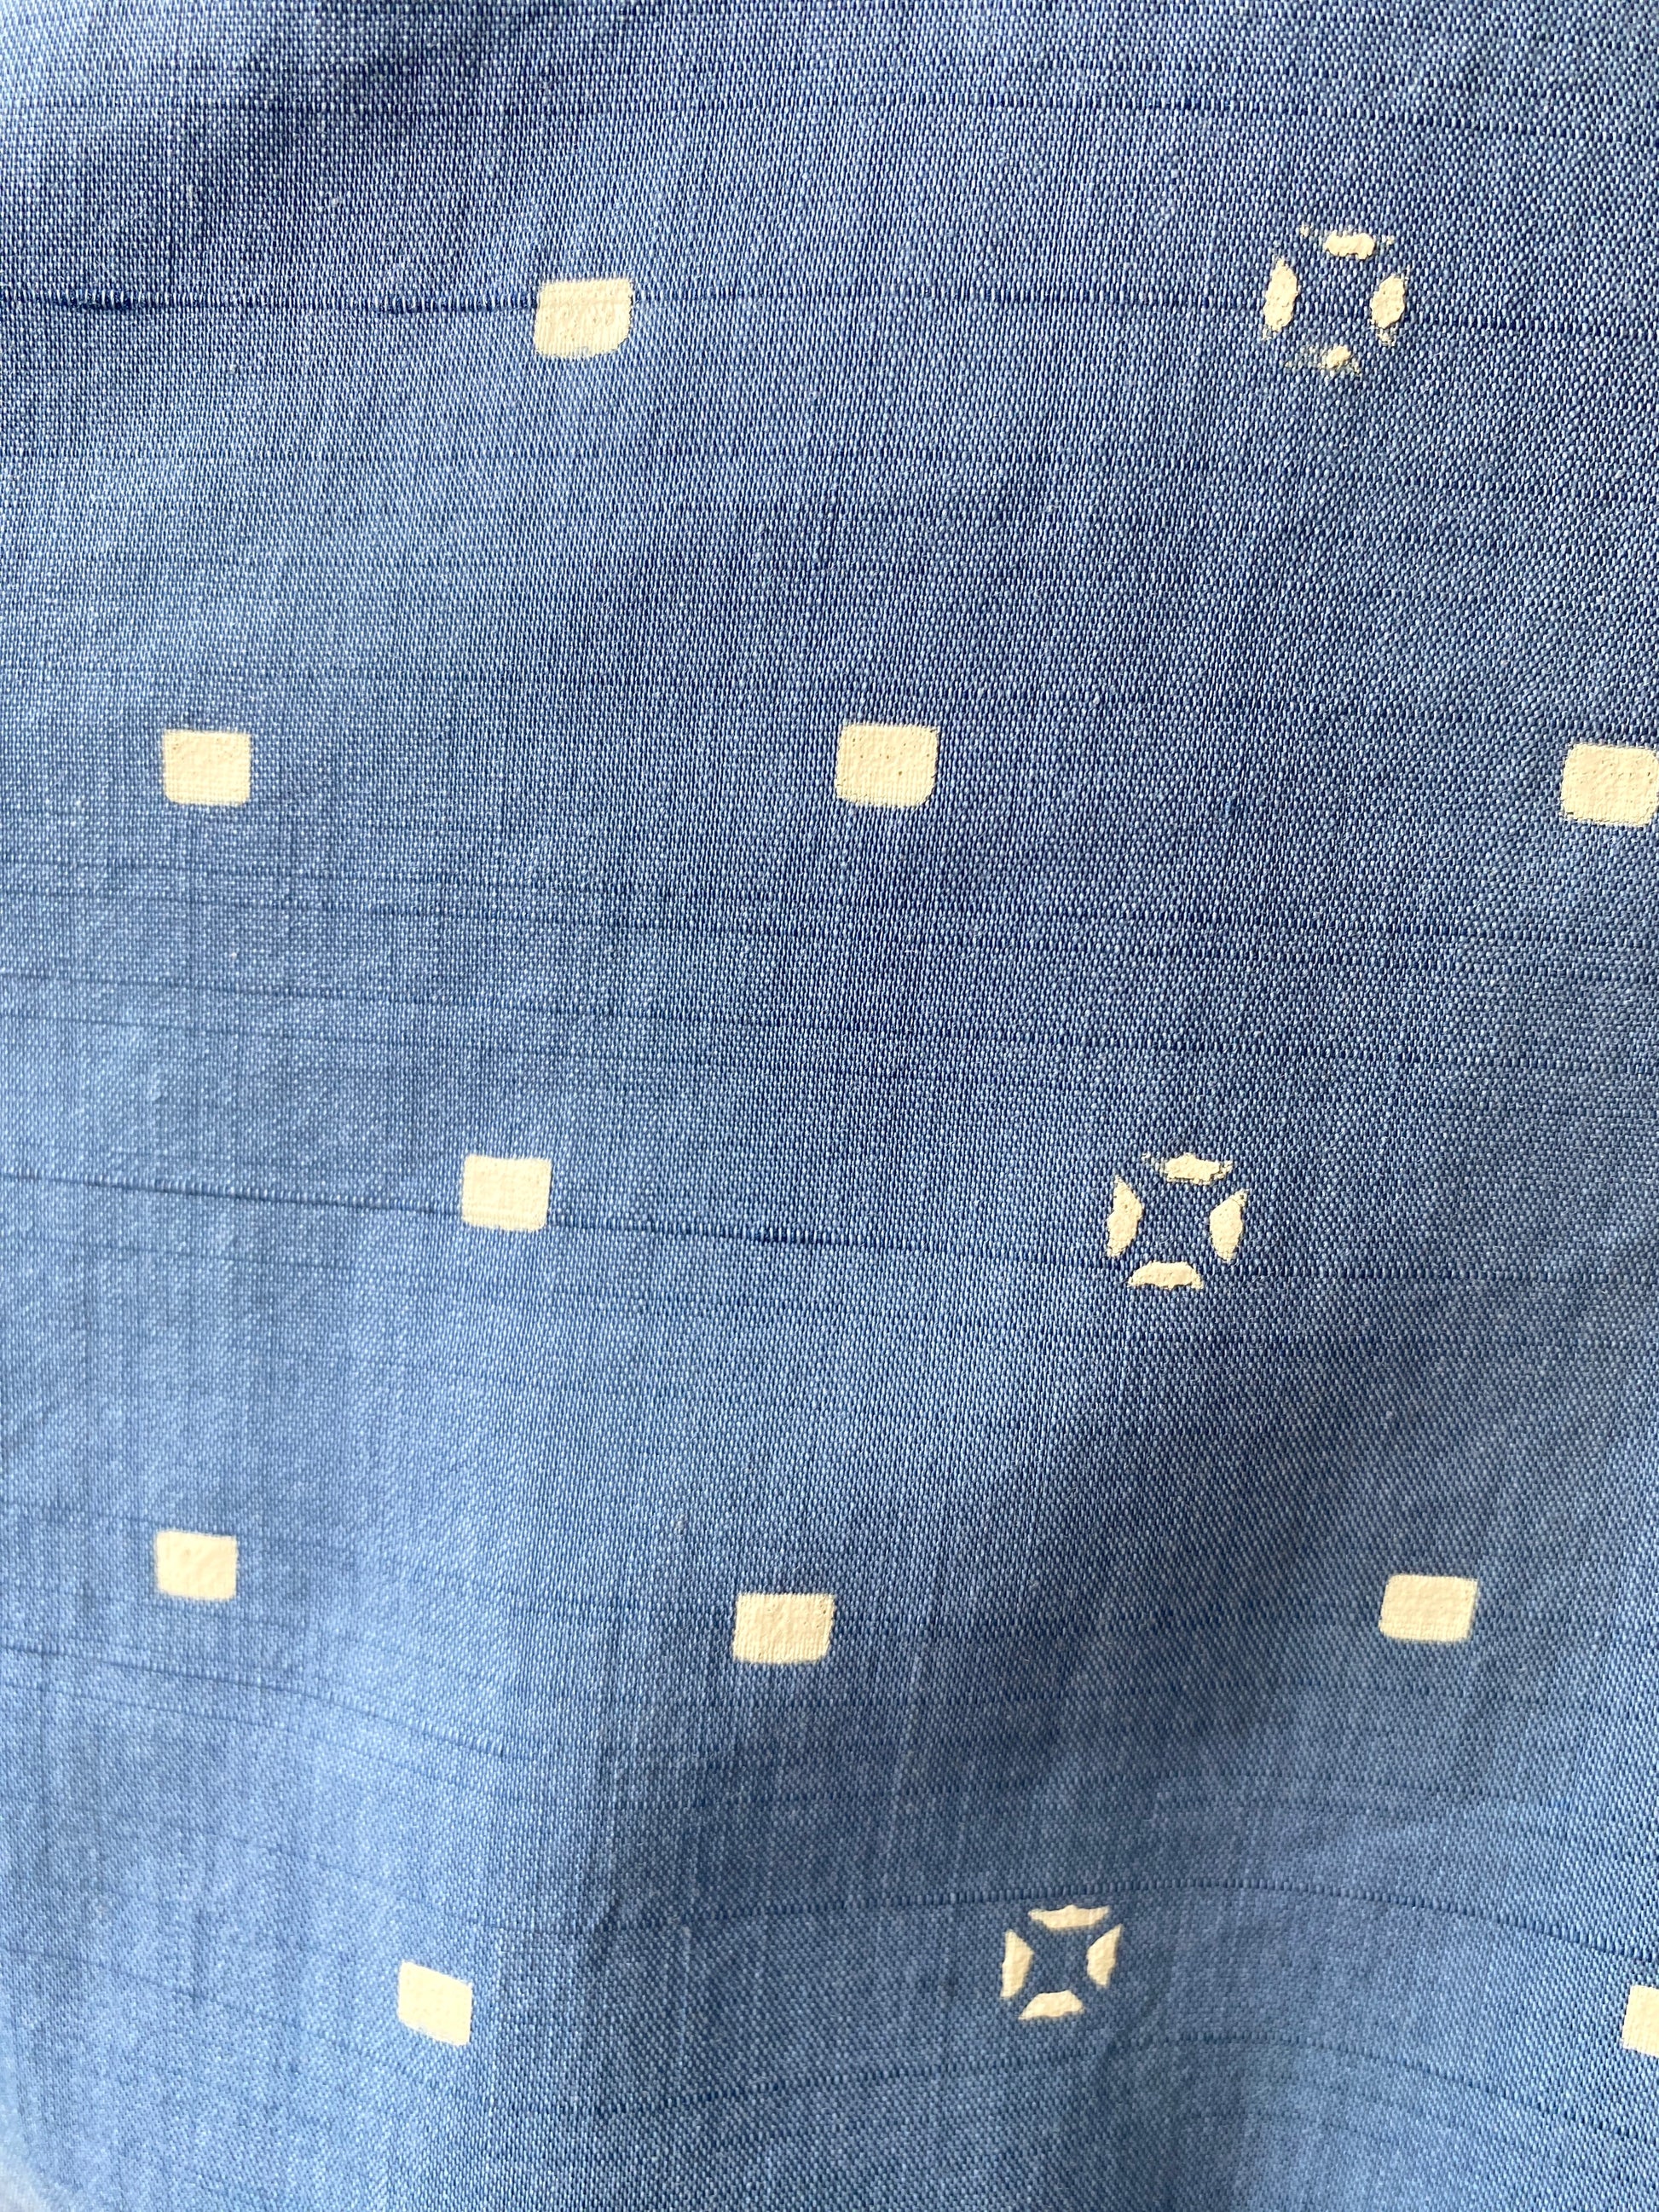  Vintage 1940s/50s Blue Geometric Print House Dress, Medium 